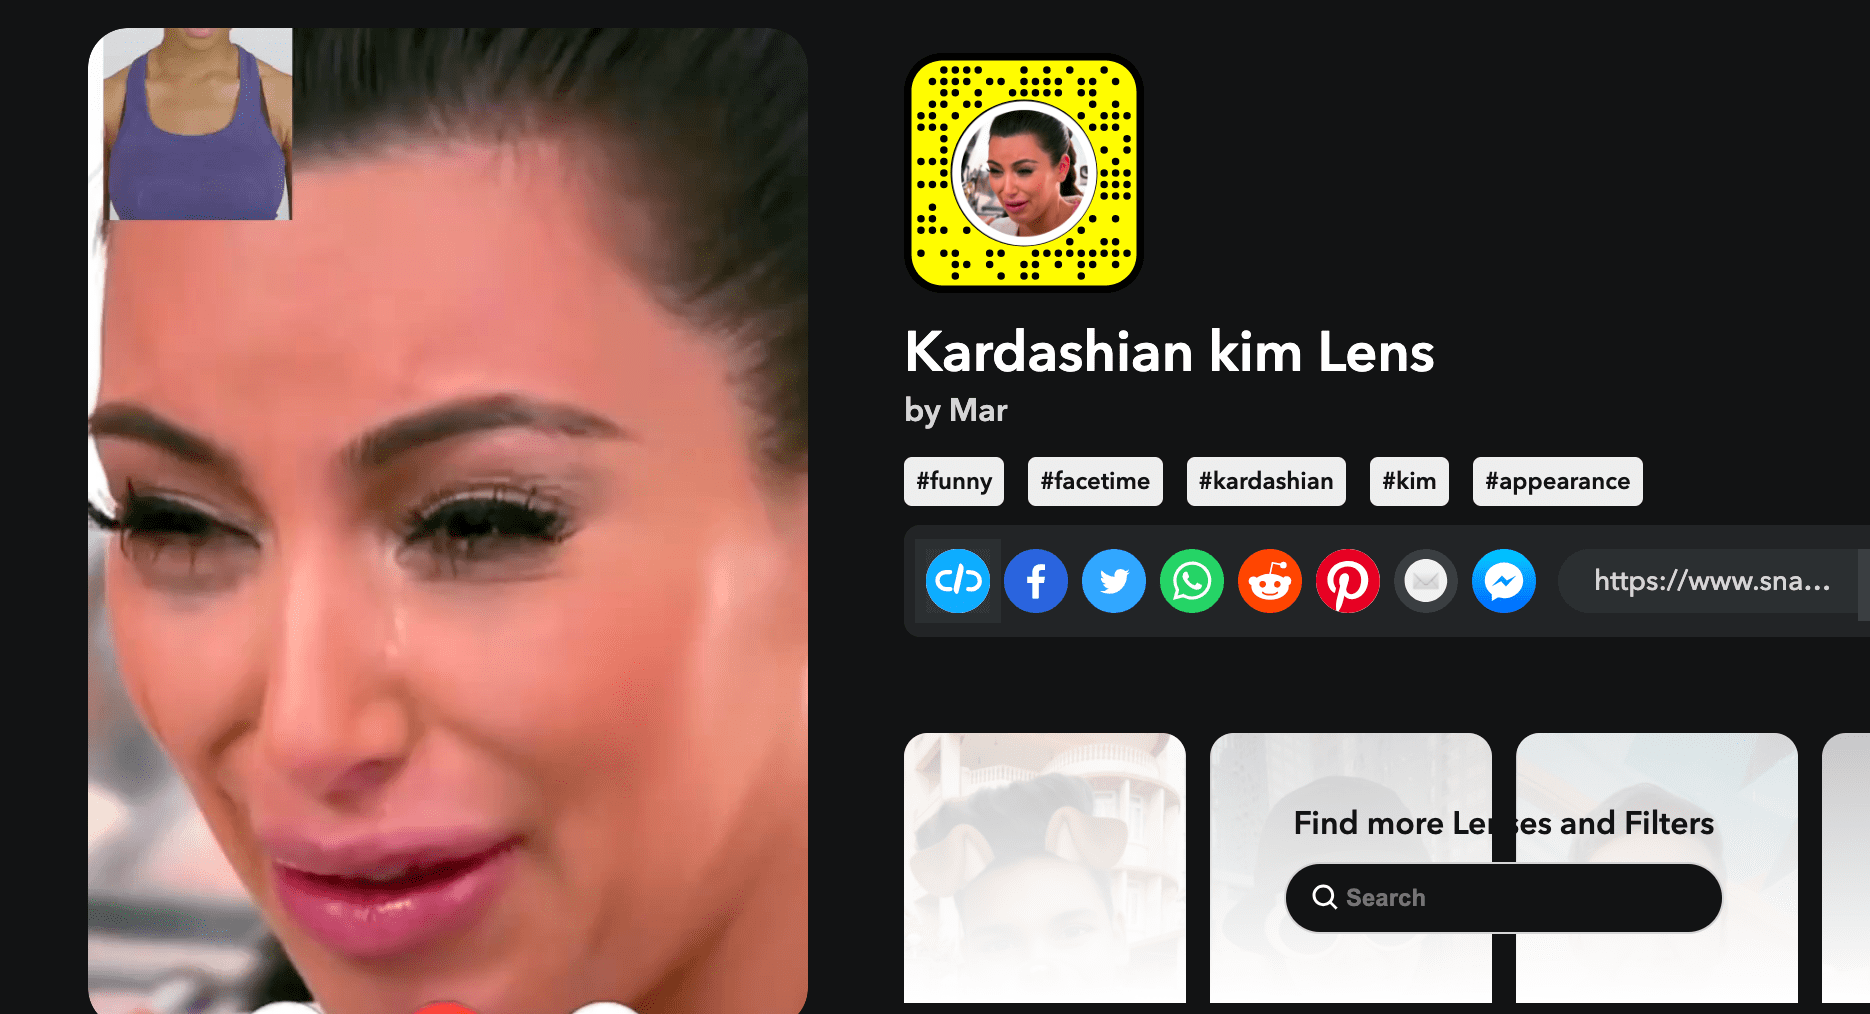 Kardashian Kim Lens by Mar